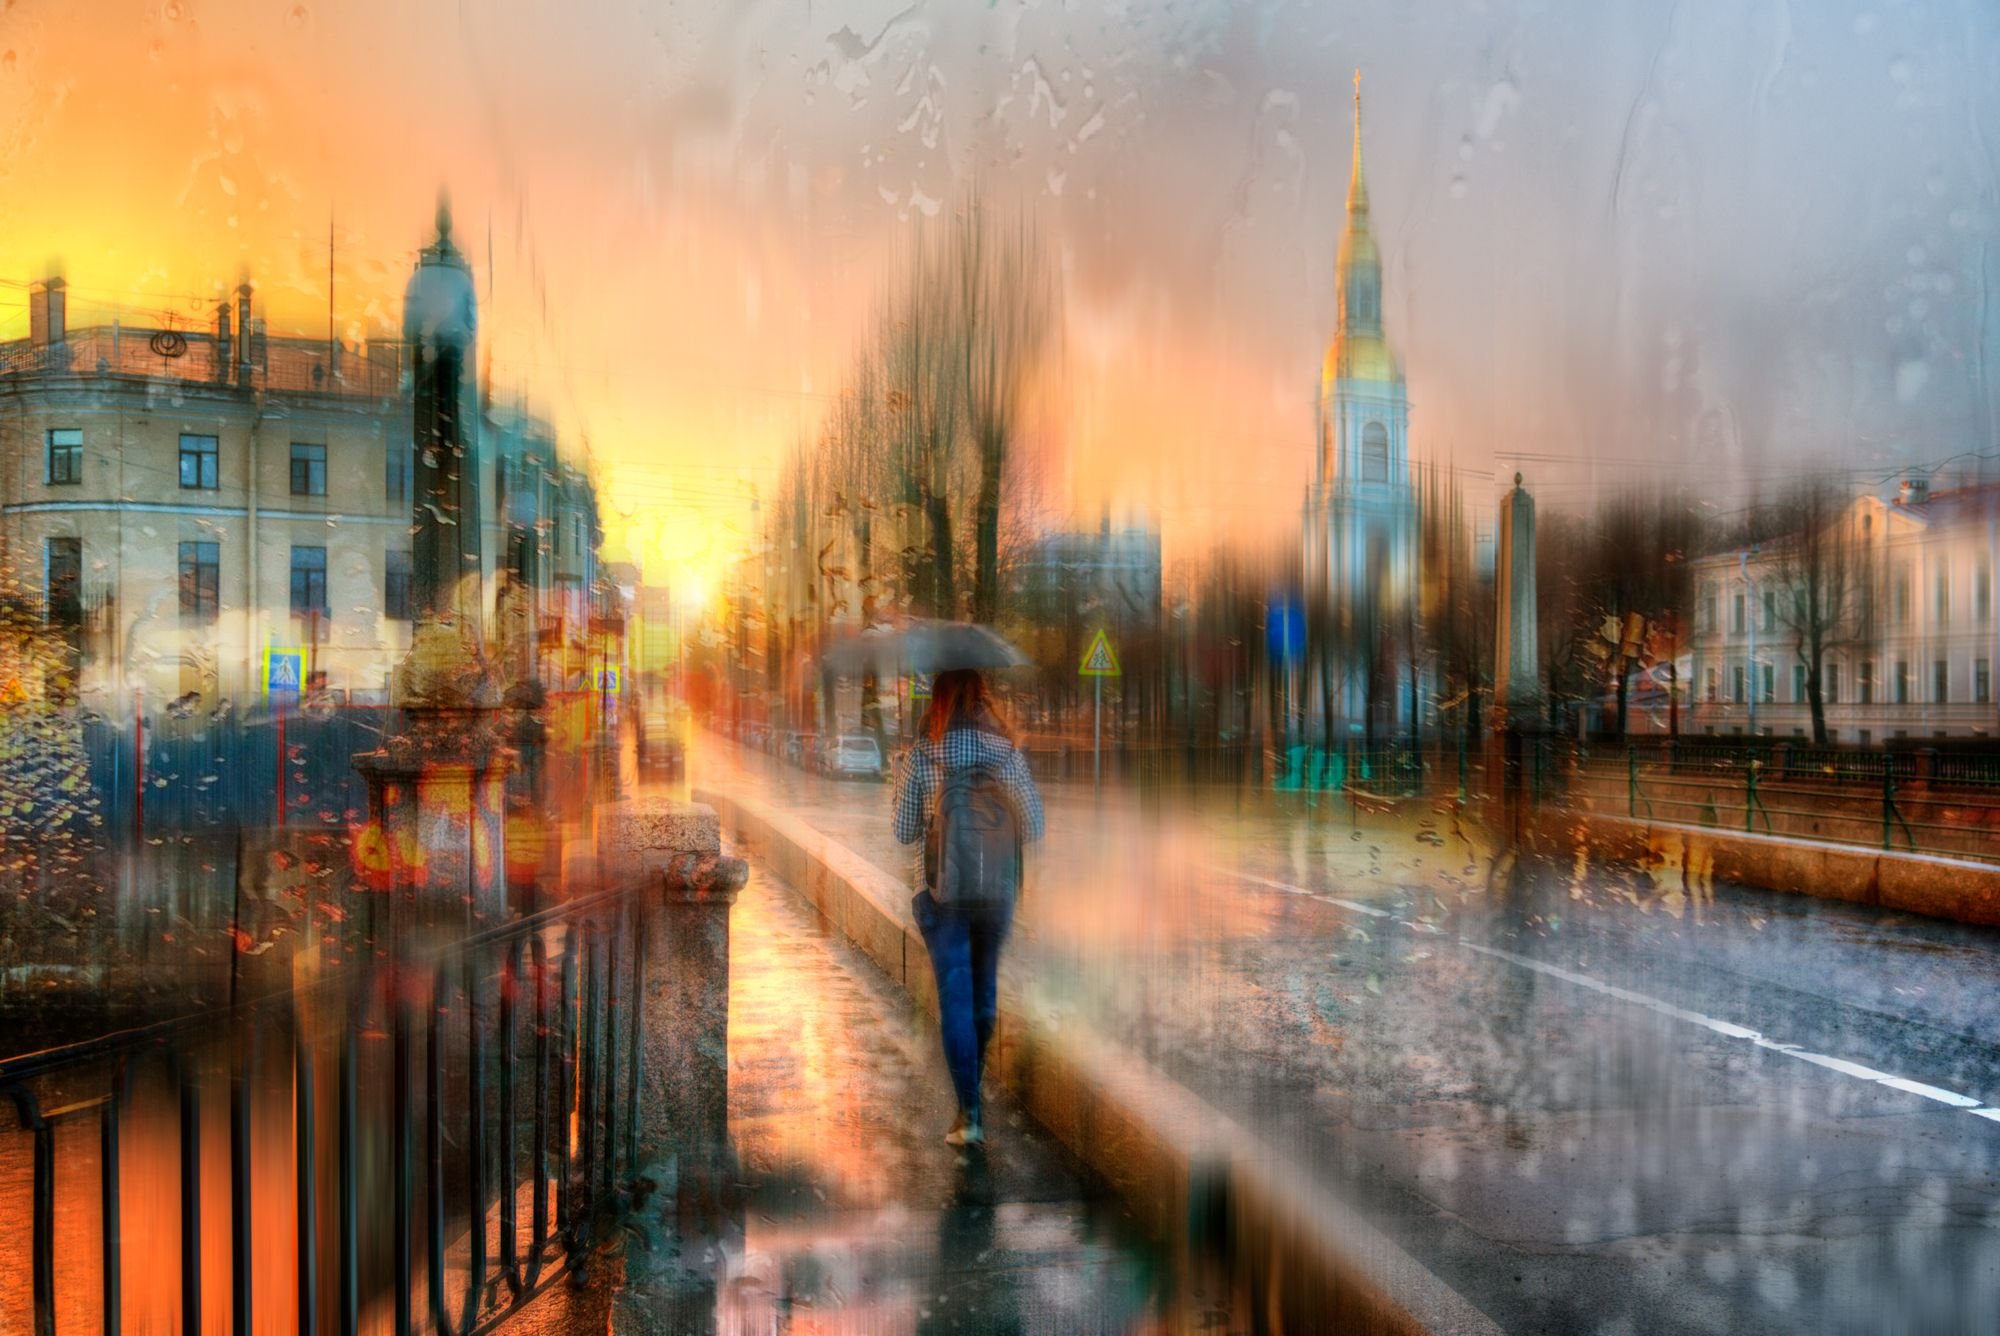 дождливый петербург фото